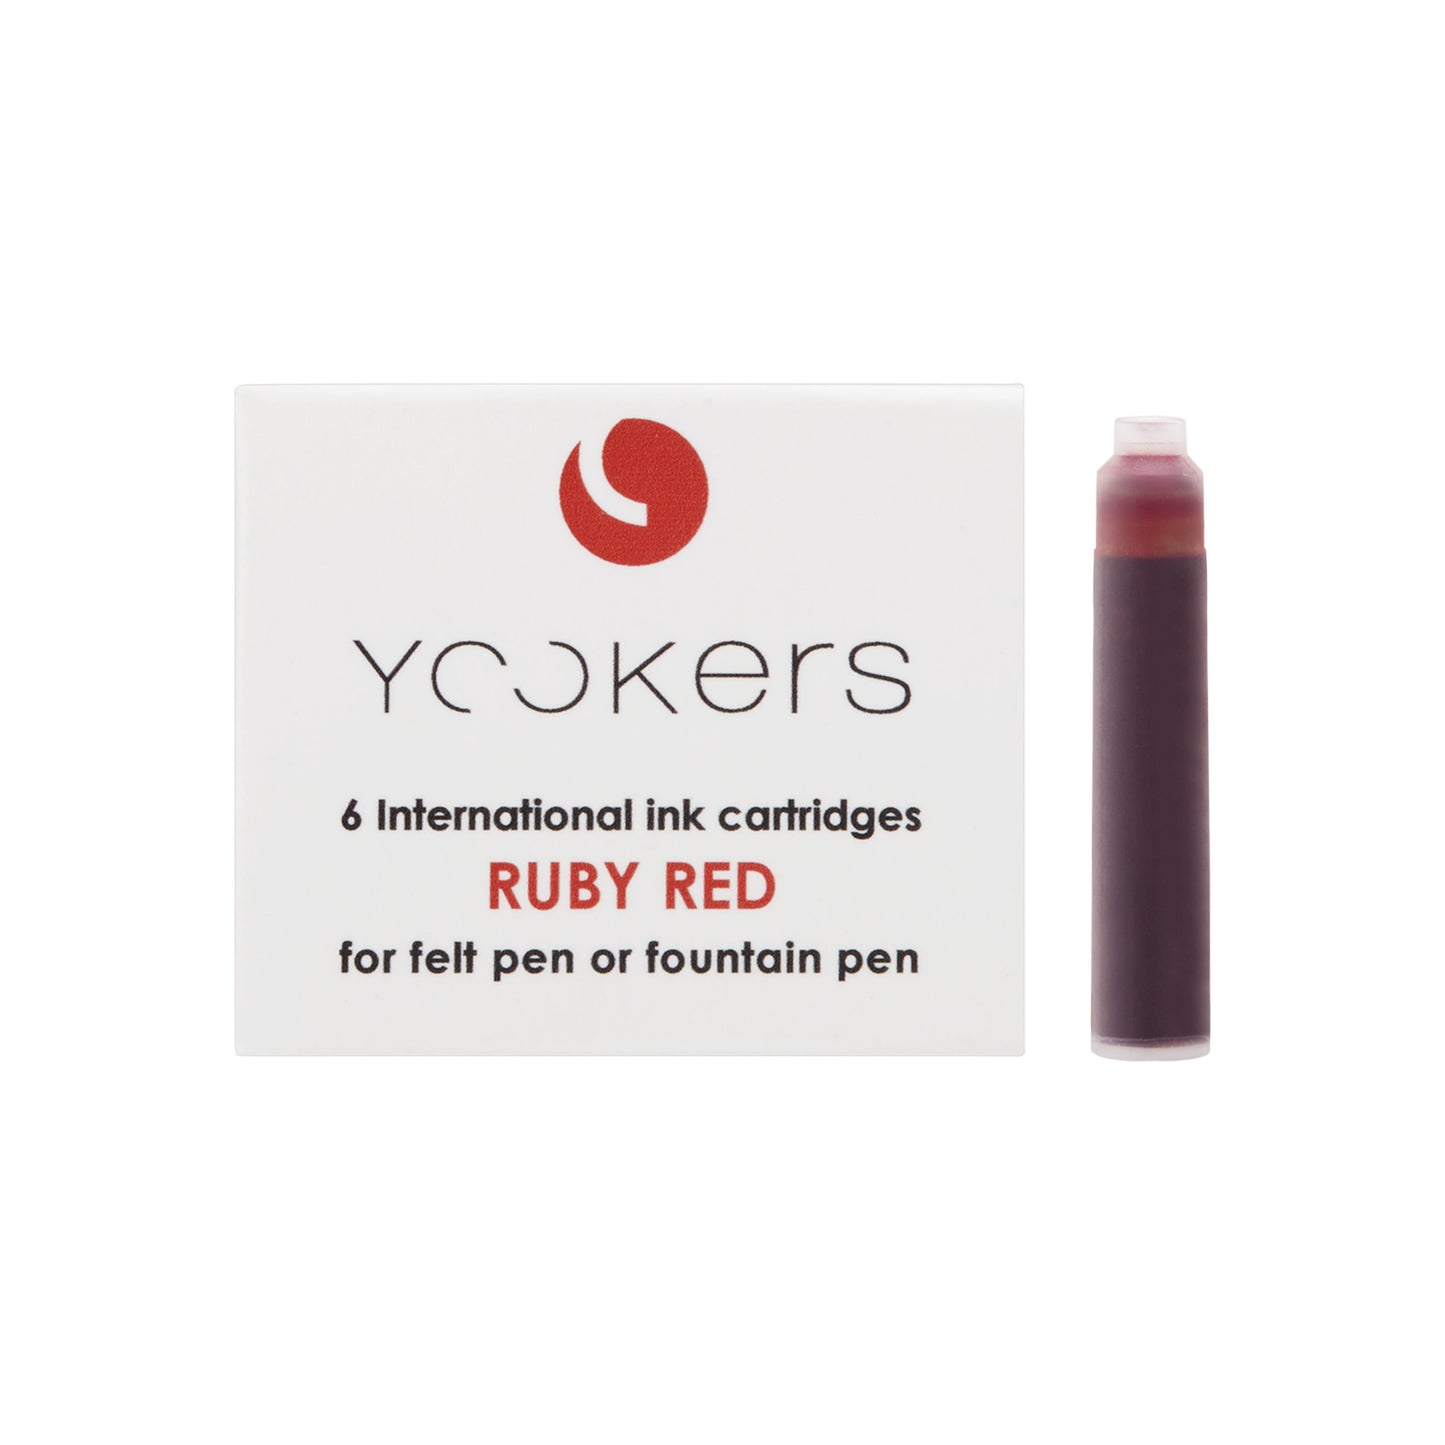 Yookers 6 international ink cartridges Ruby Red.